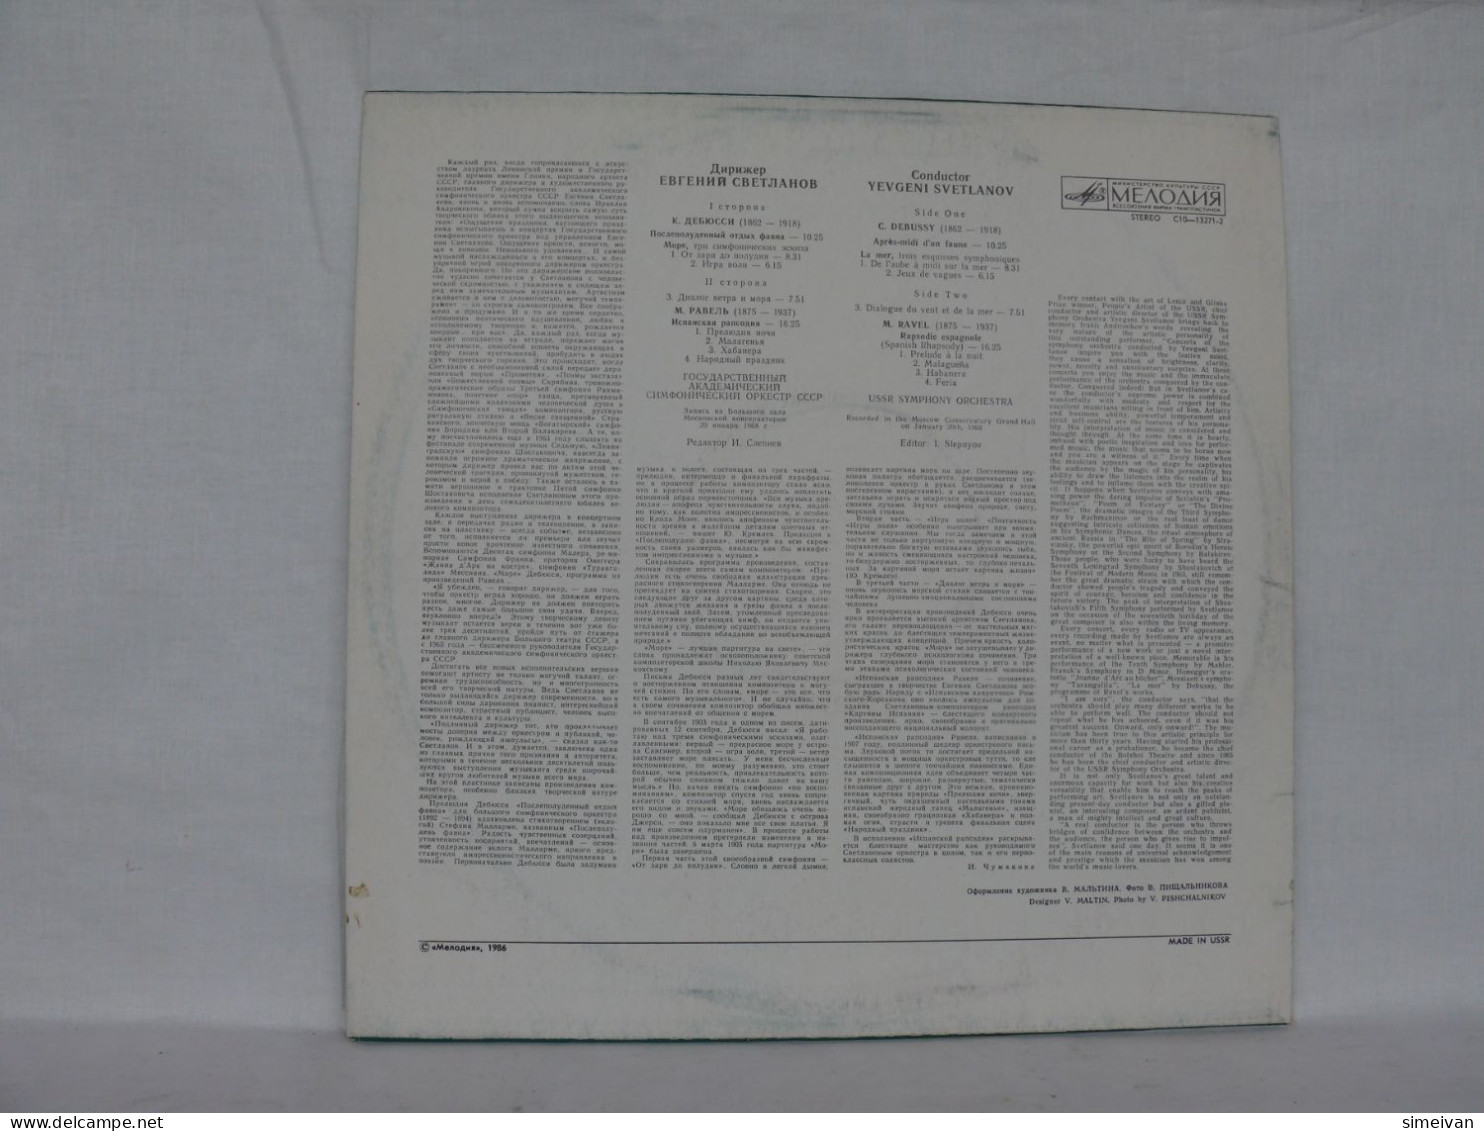 C. DEBUSSY M. RAVEL CONDUCTS E. SVETLANOV LP Record MADE IN USSR 13271-72 #1723 - Opera